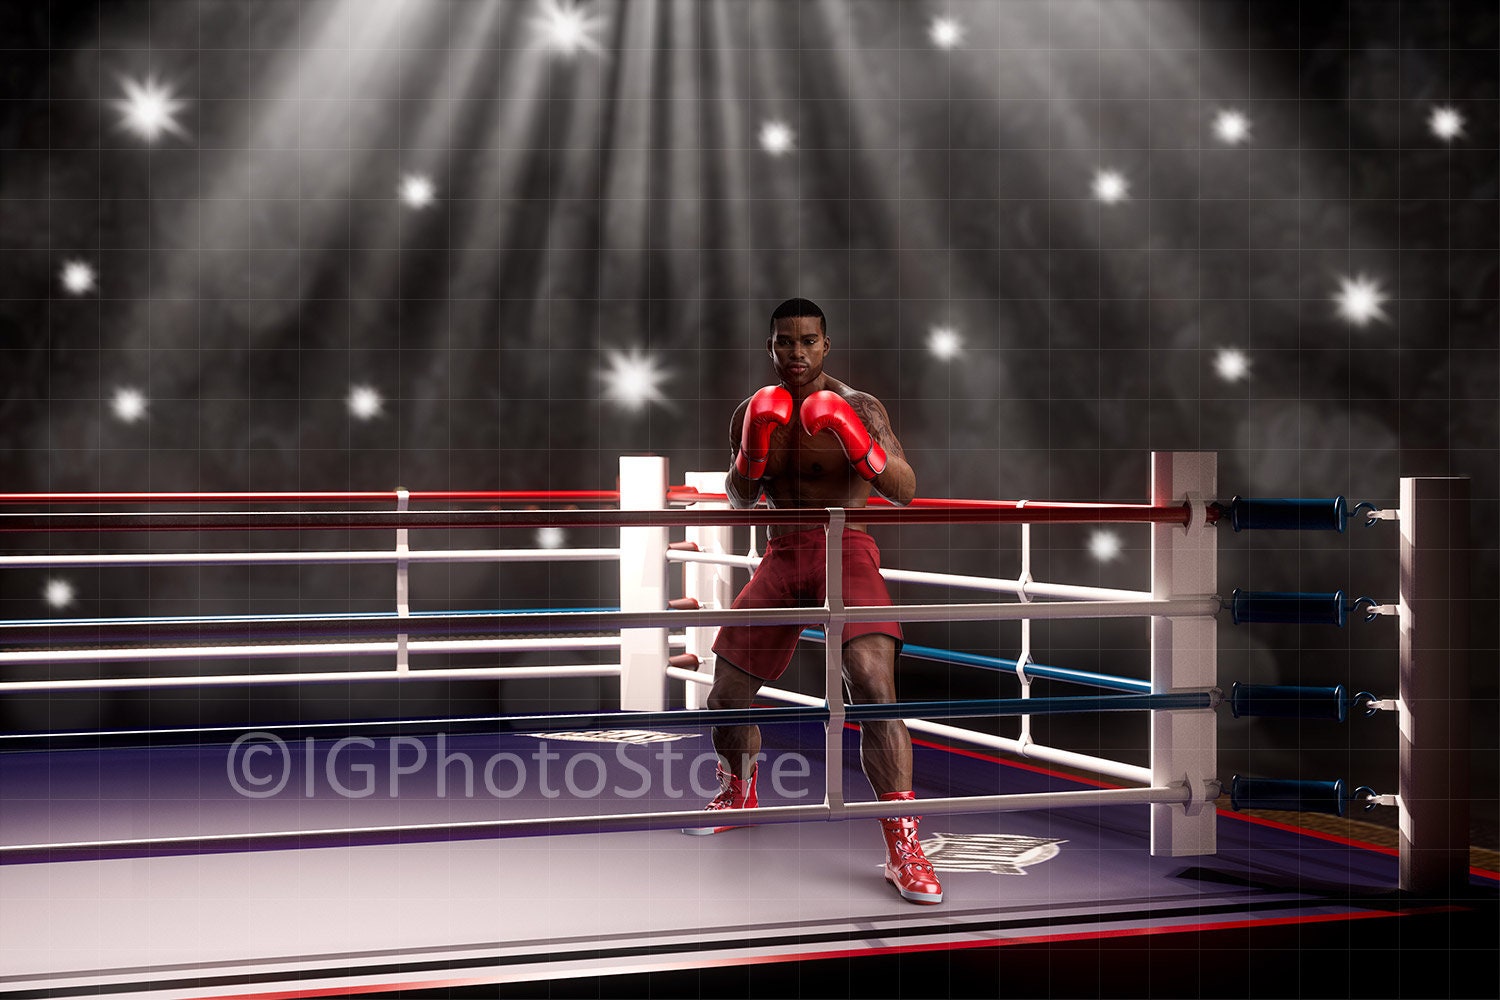 Boxing Ring or Wrestling Ring Digital Backdrop Sports image pic image